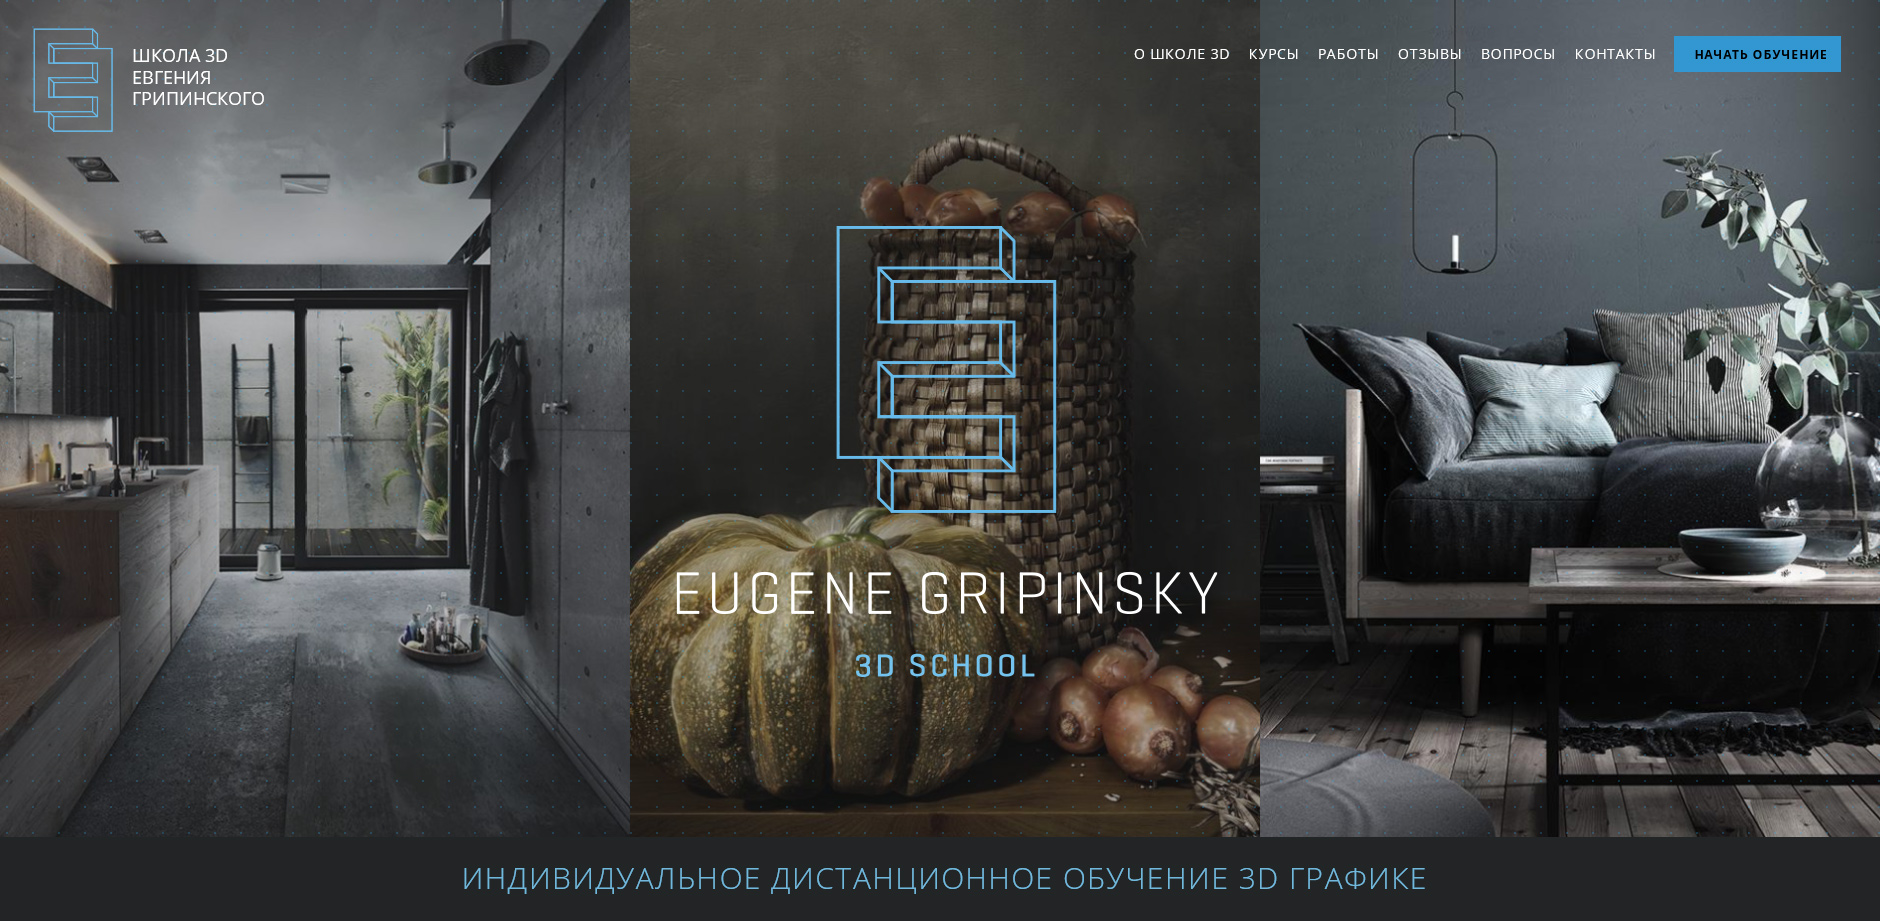 Eugene Gripinsky 3D School main page